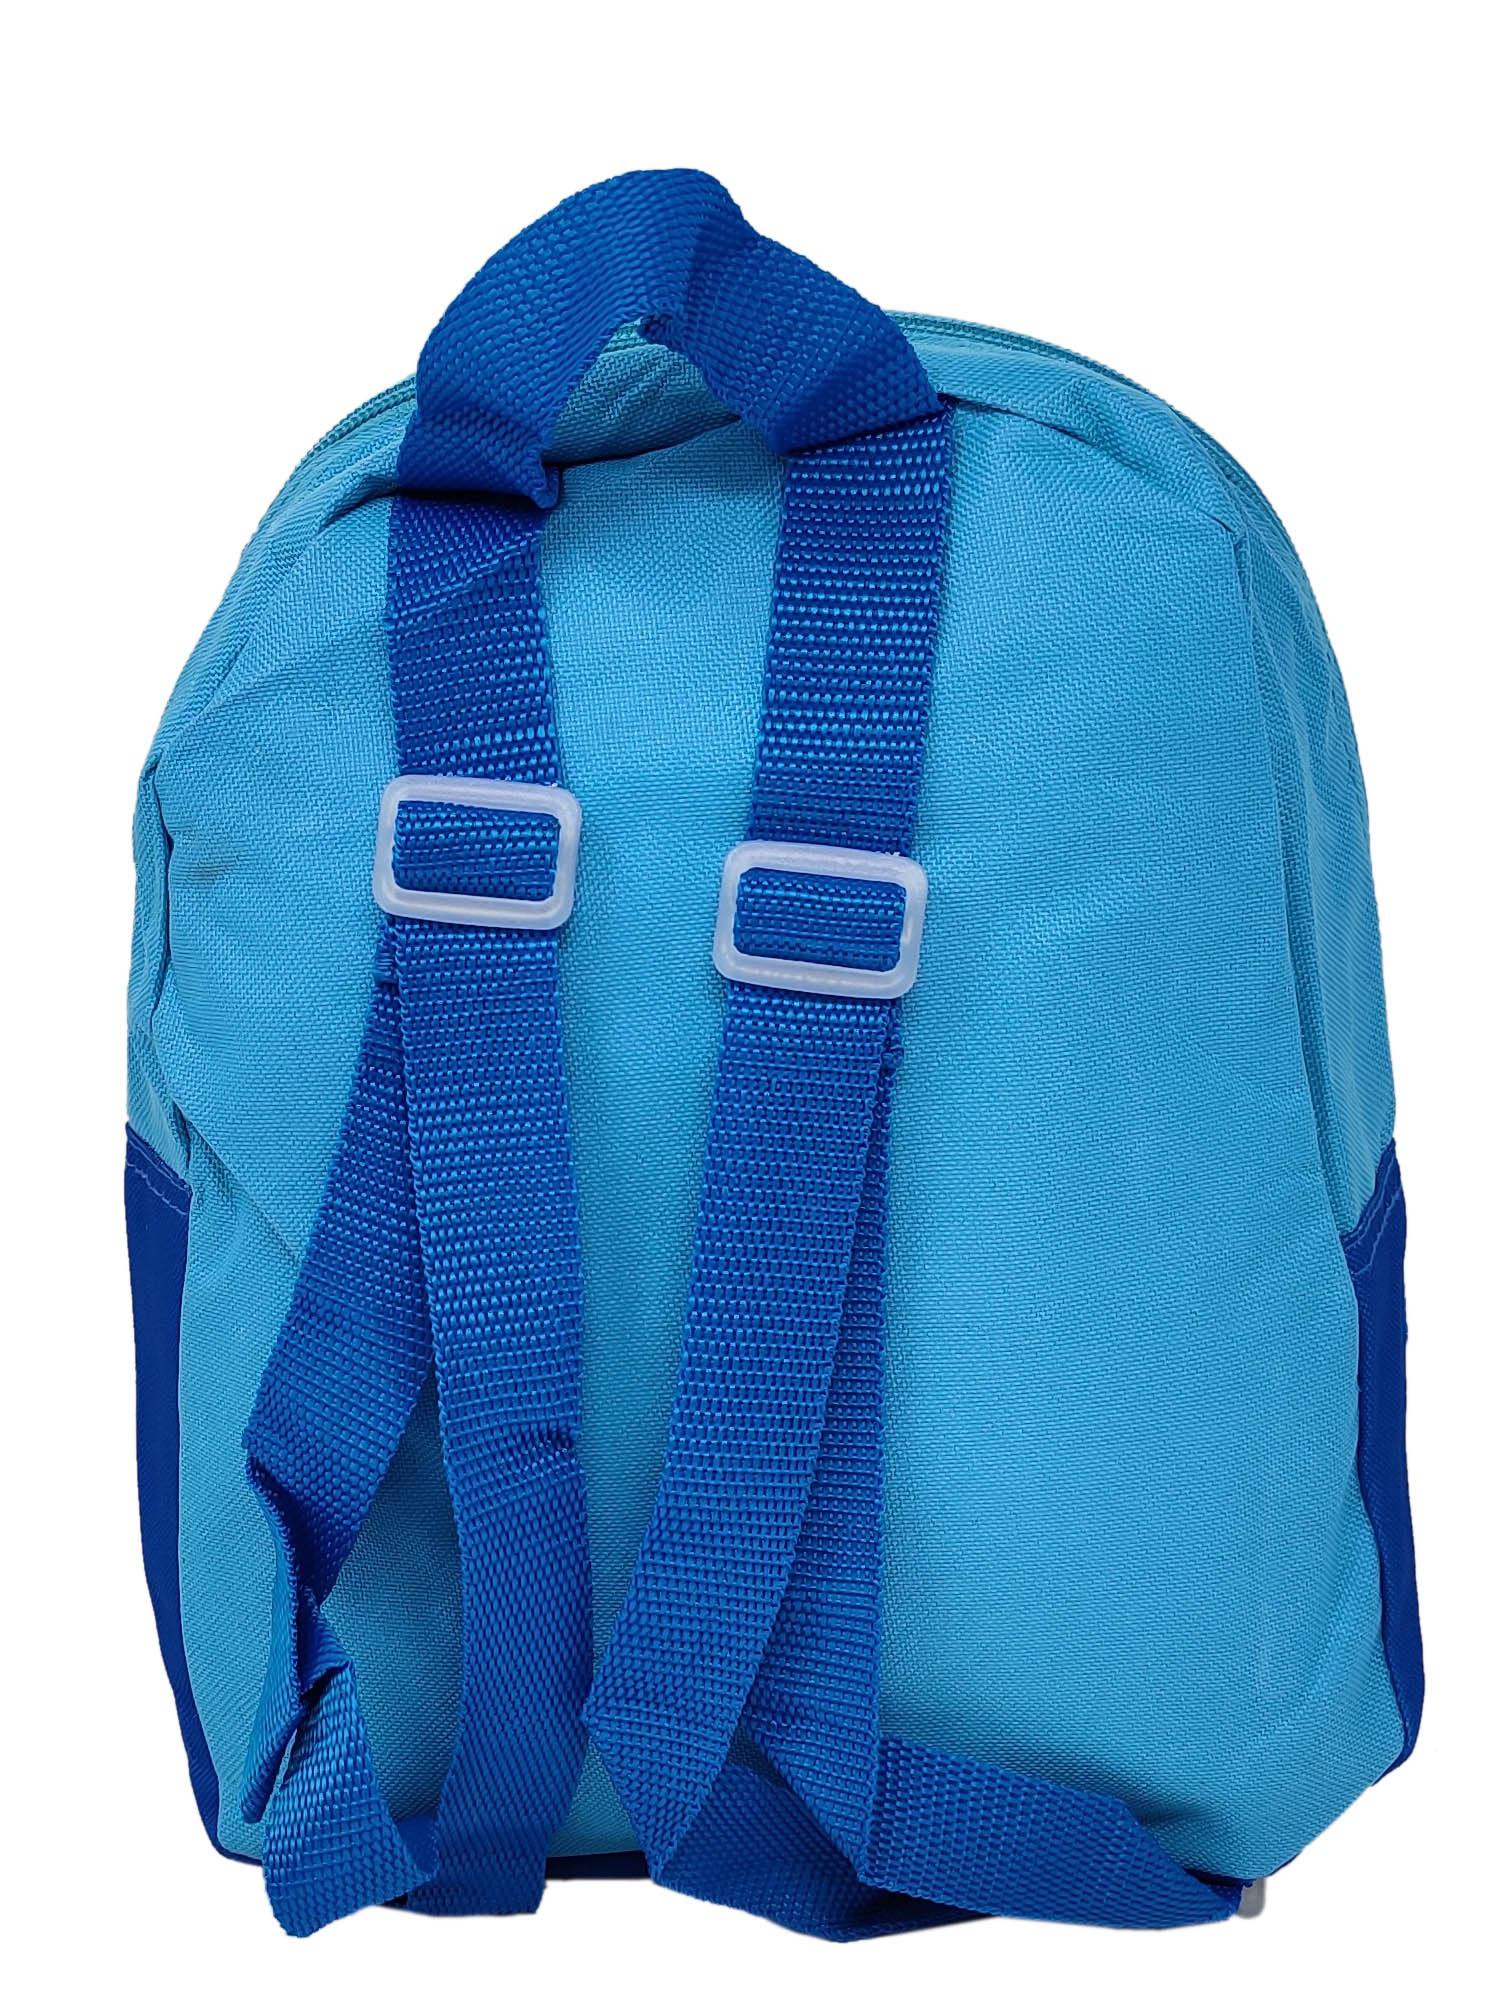 Disney Lilo Stitch School Backpacks